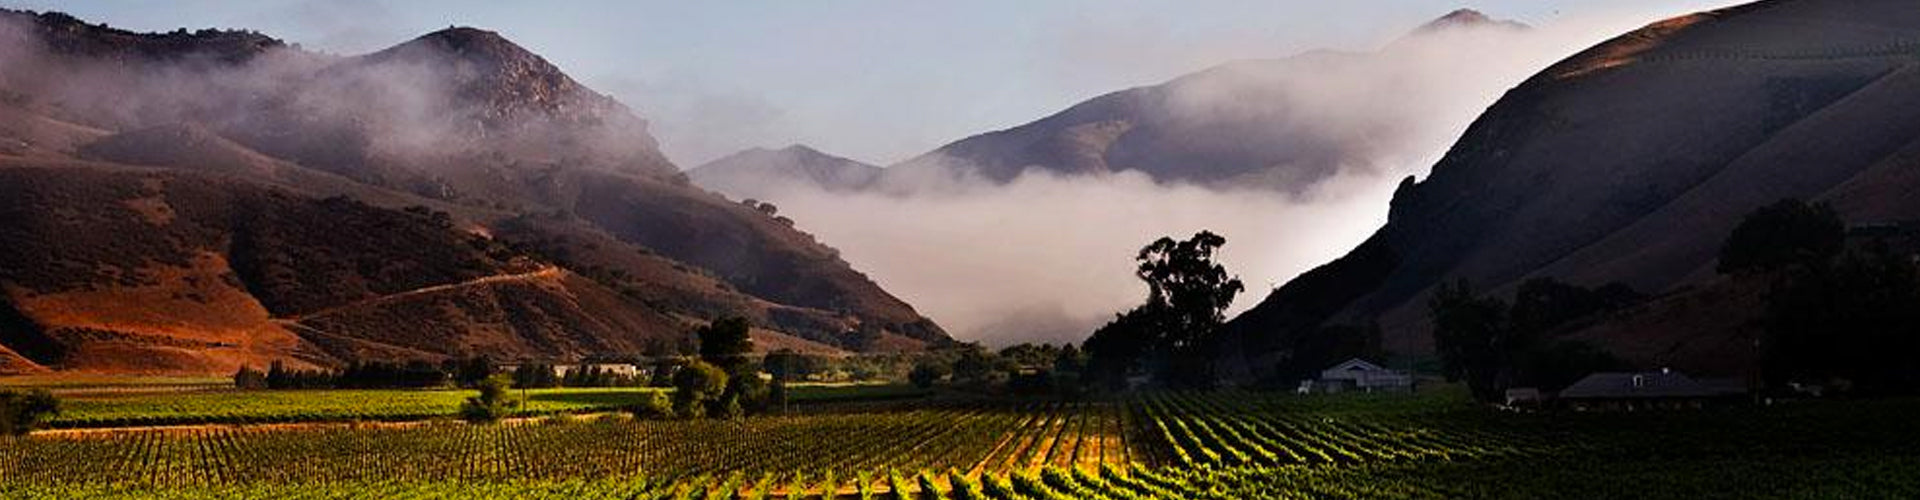 Santa Maria Valley Vineyards in Santa Barbara County, California